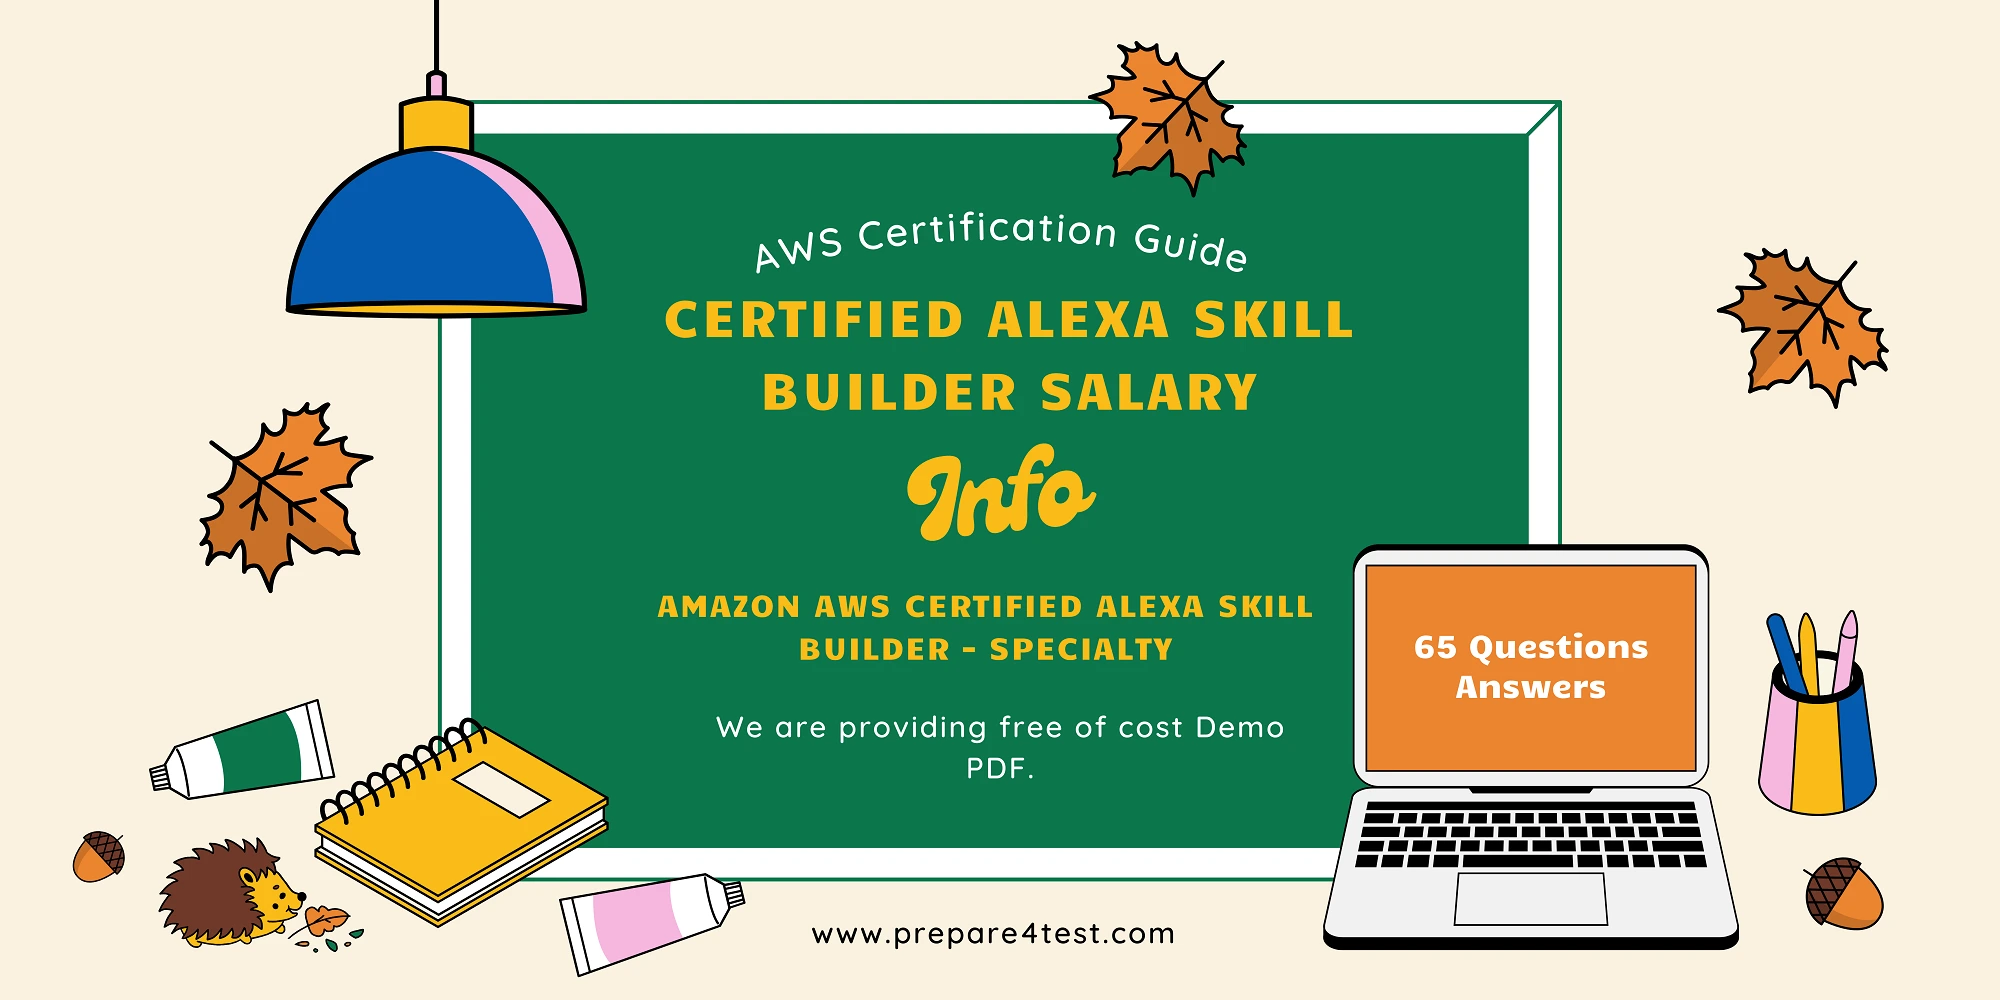 AWS Certified Alexa Skill Builder Salary